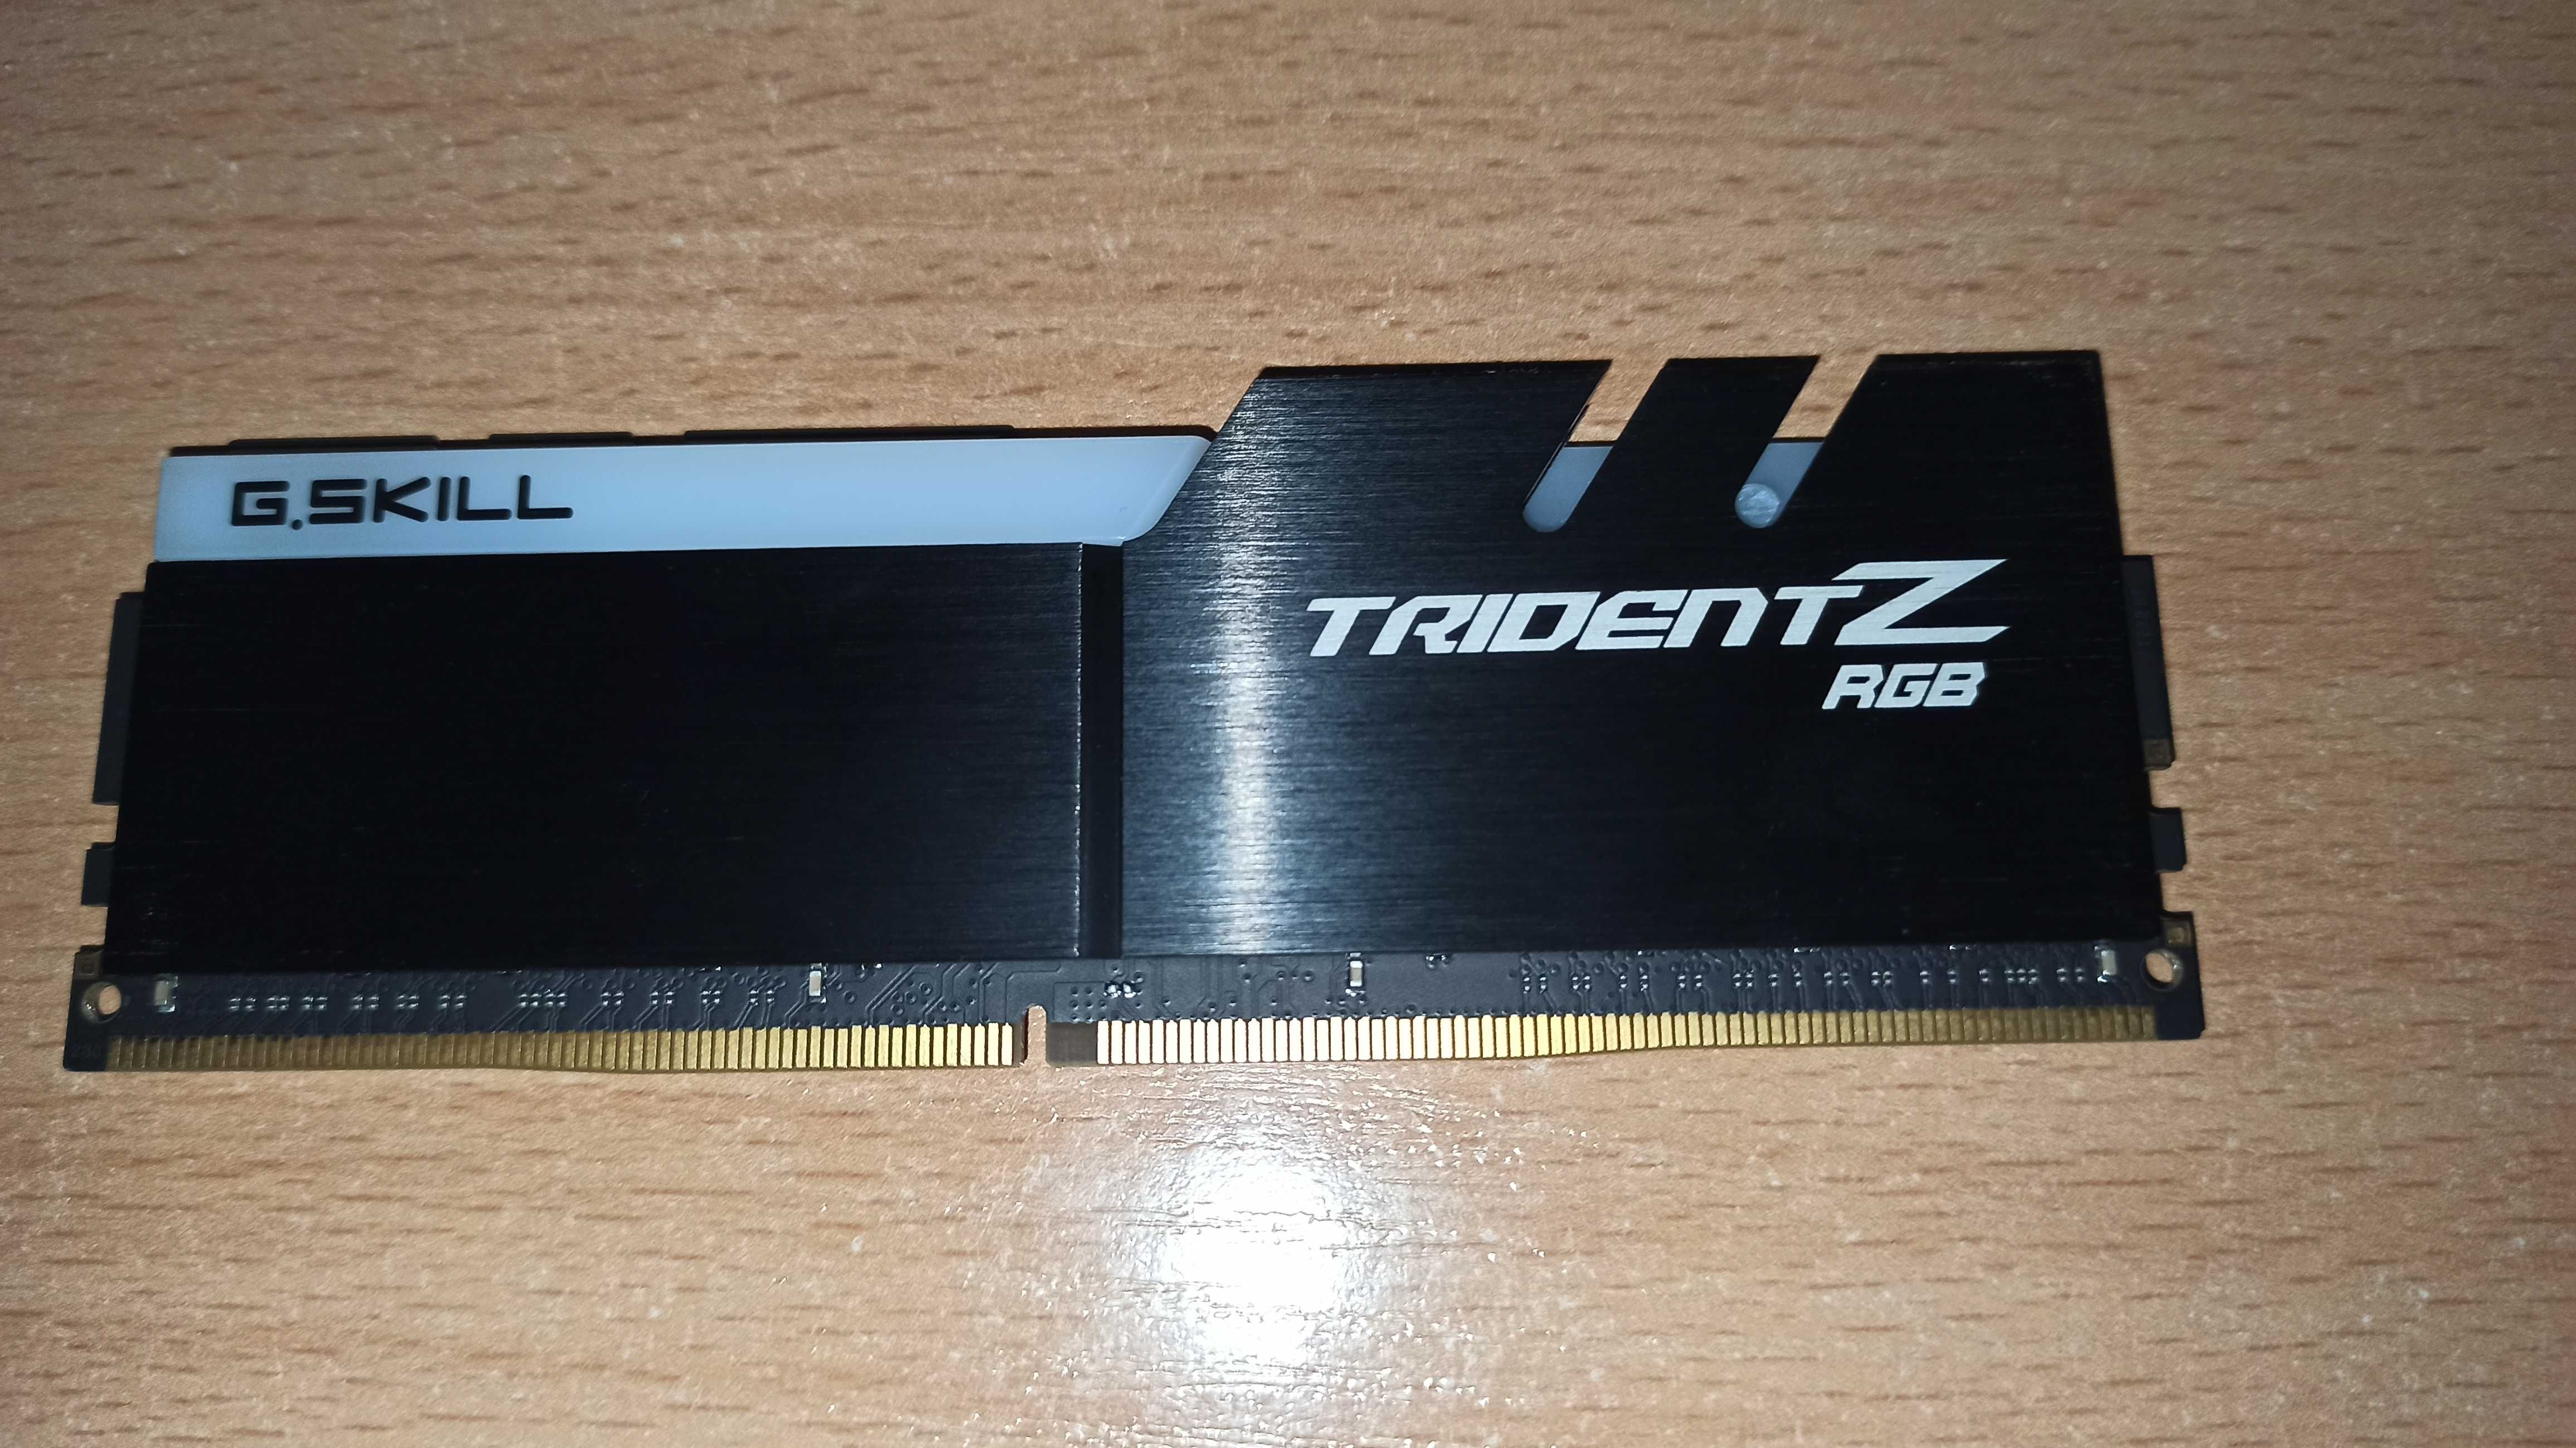 Pamięć RAM DDR4 16GB 4000 mhz CL16 Gskill TridentZ RGB G.skill led